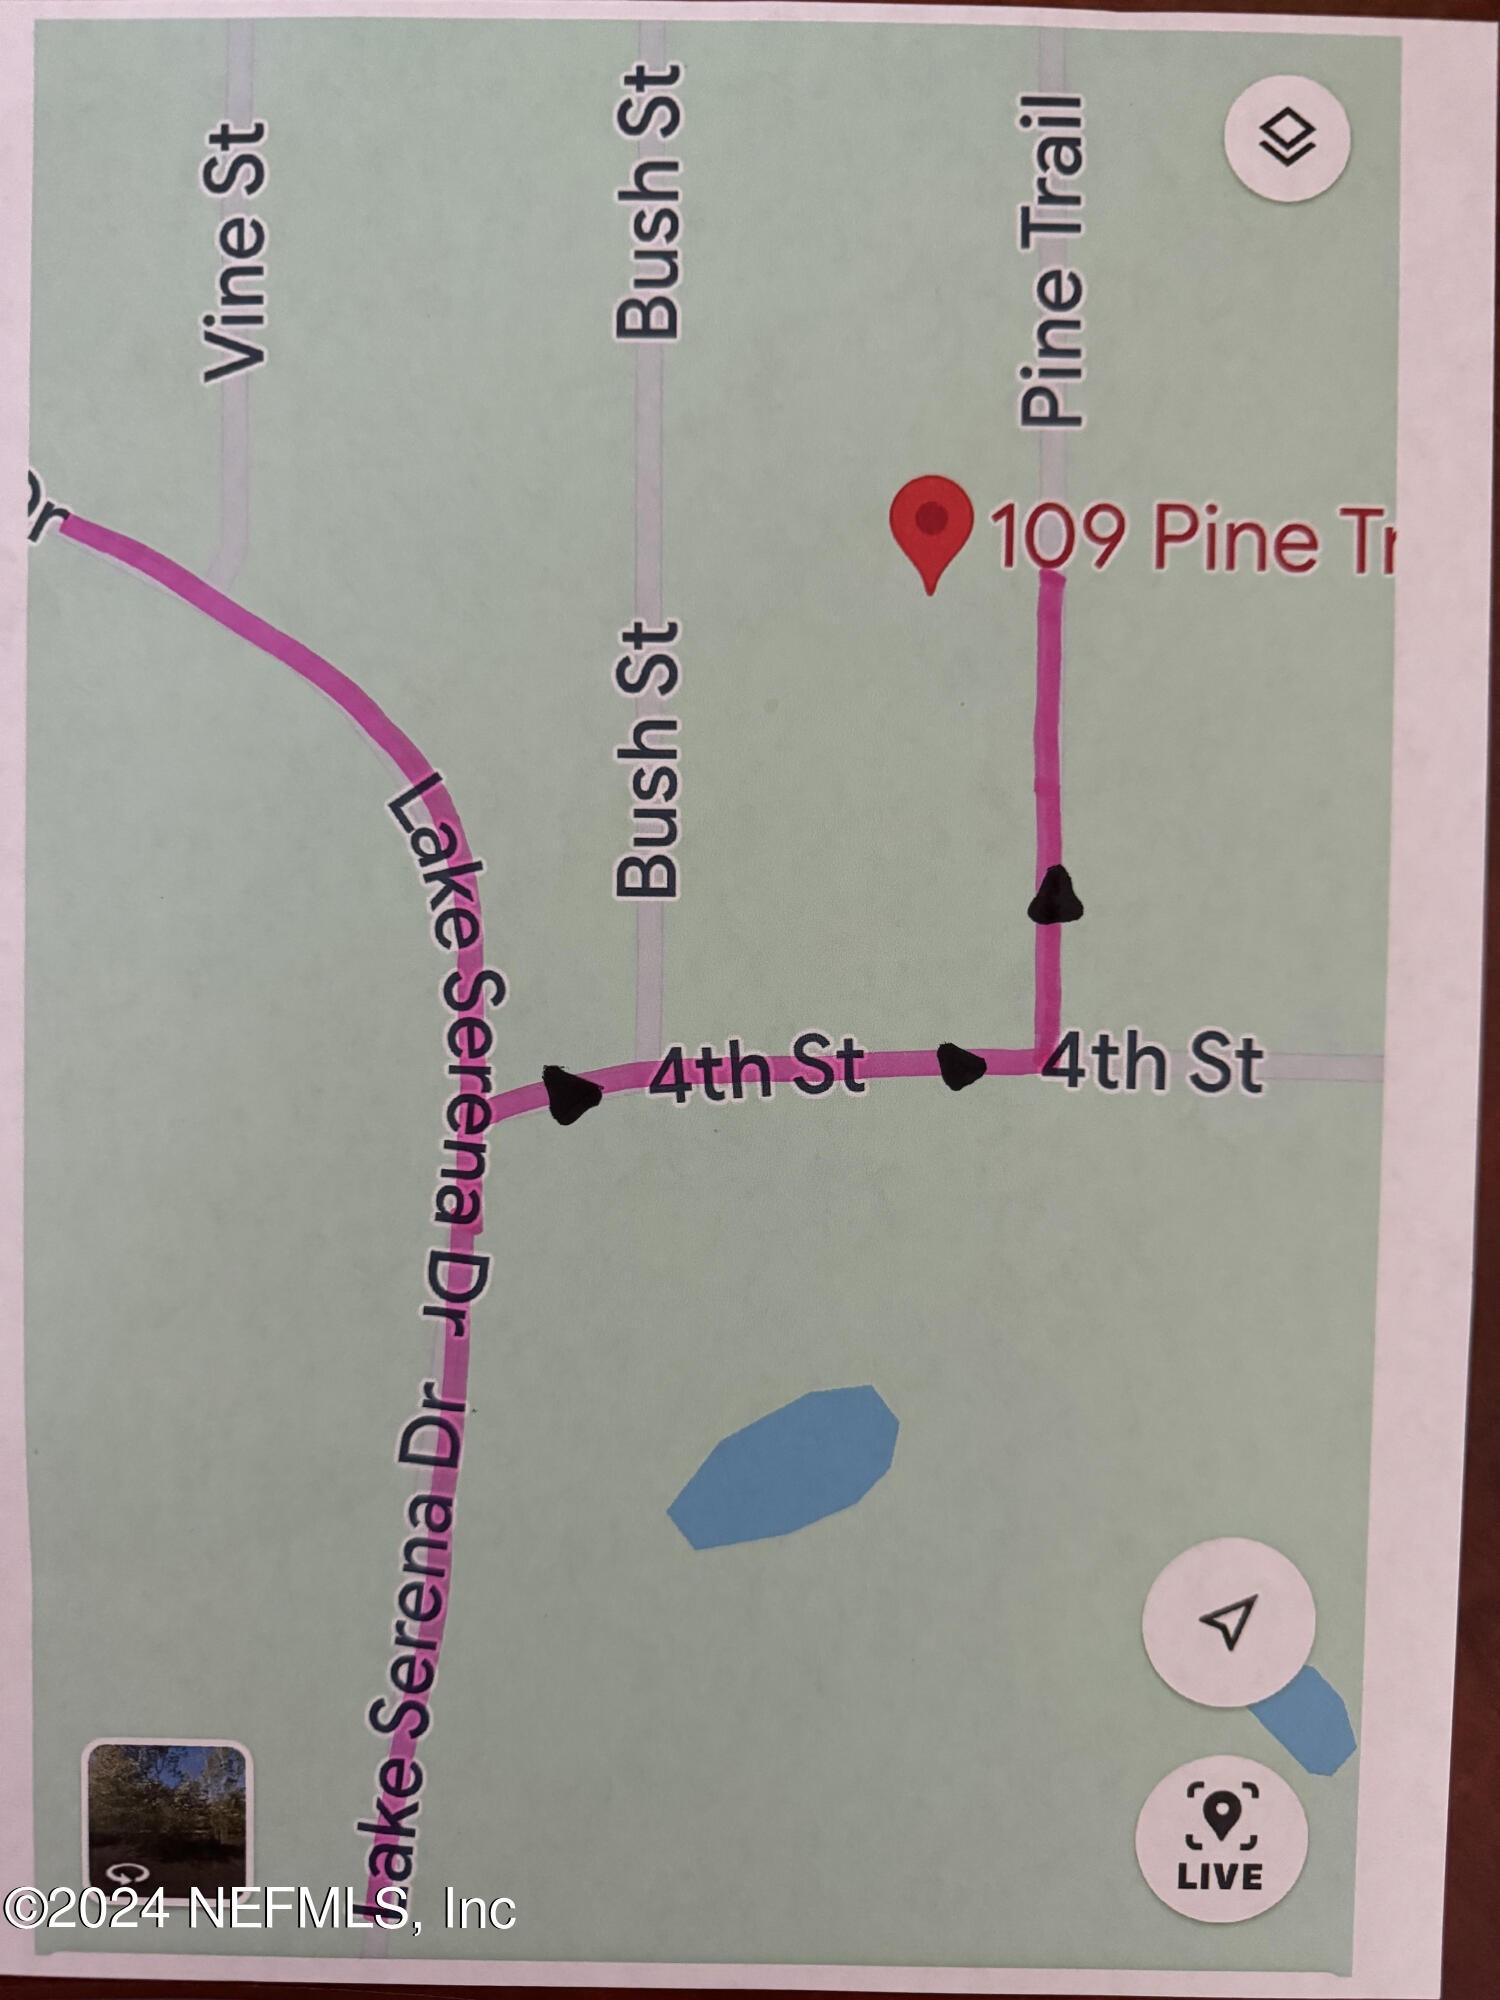 5. 109 Pine Trail